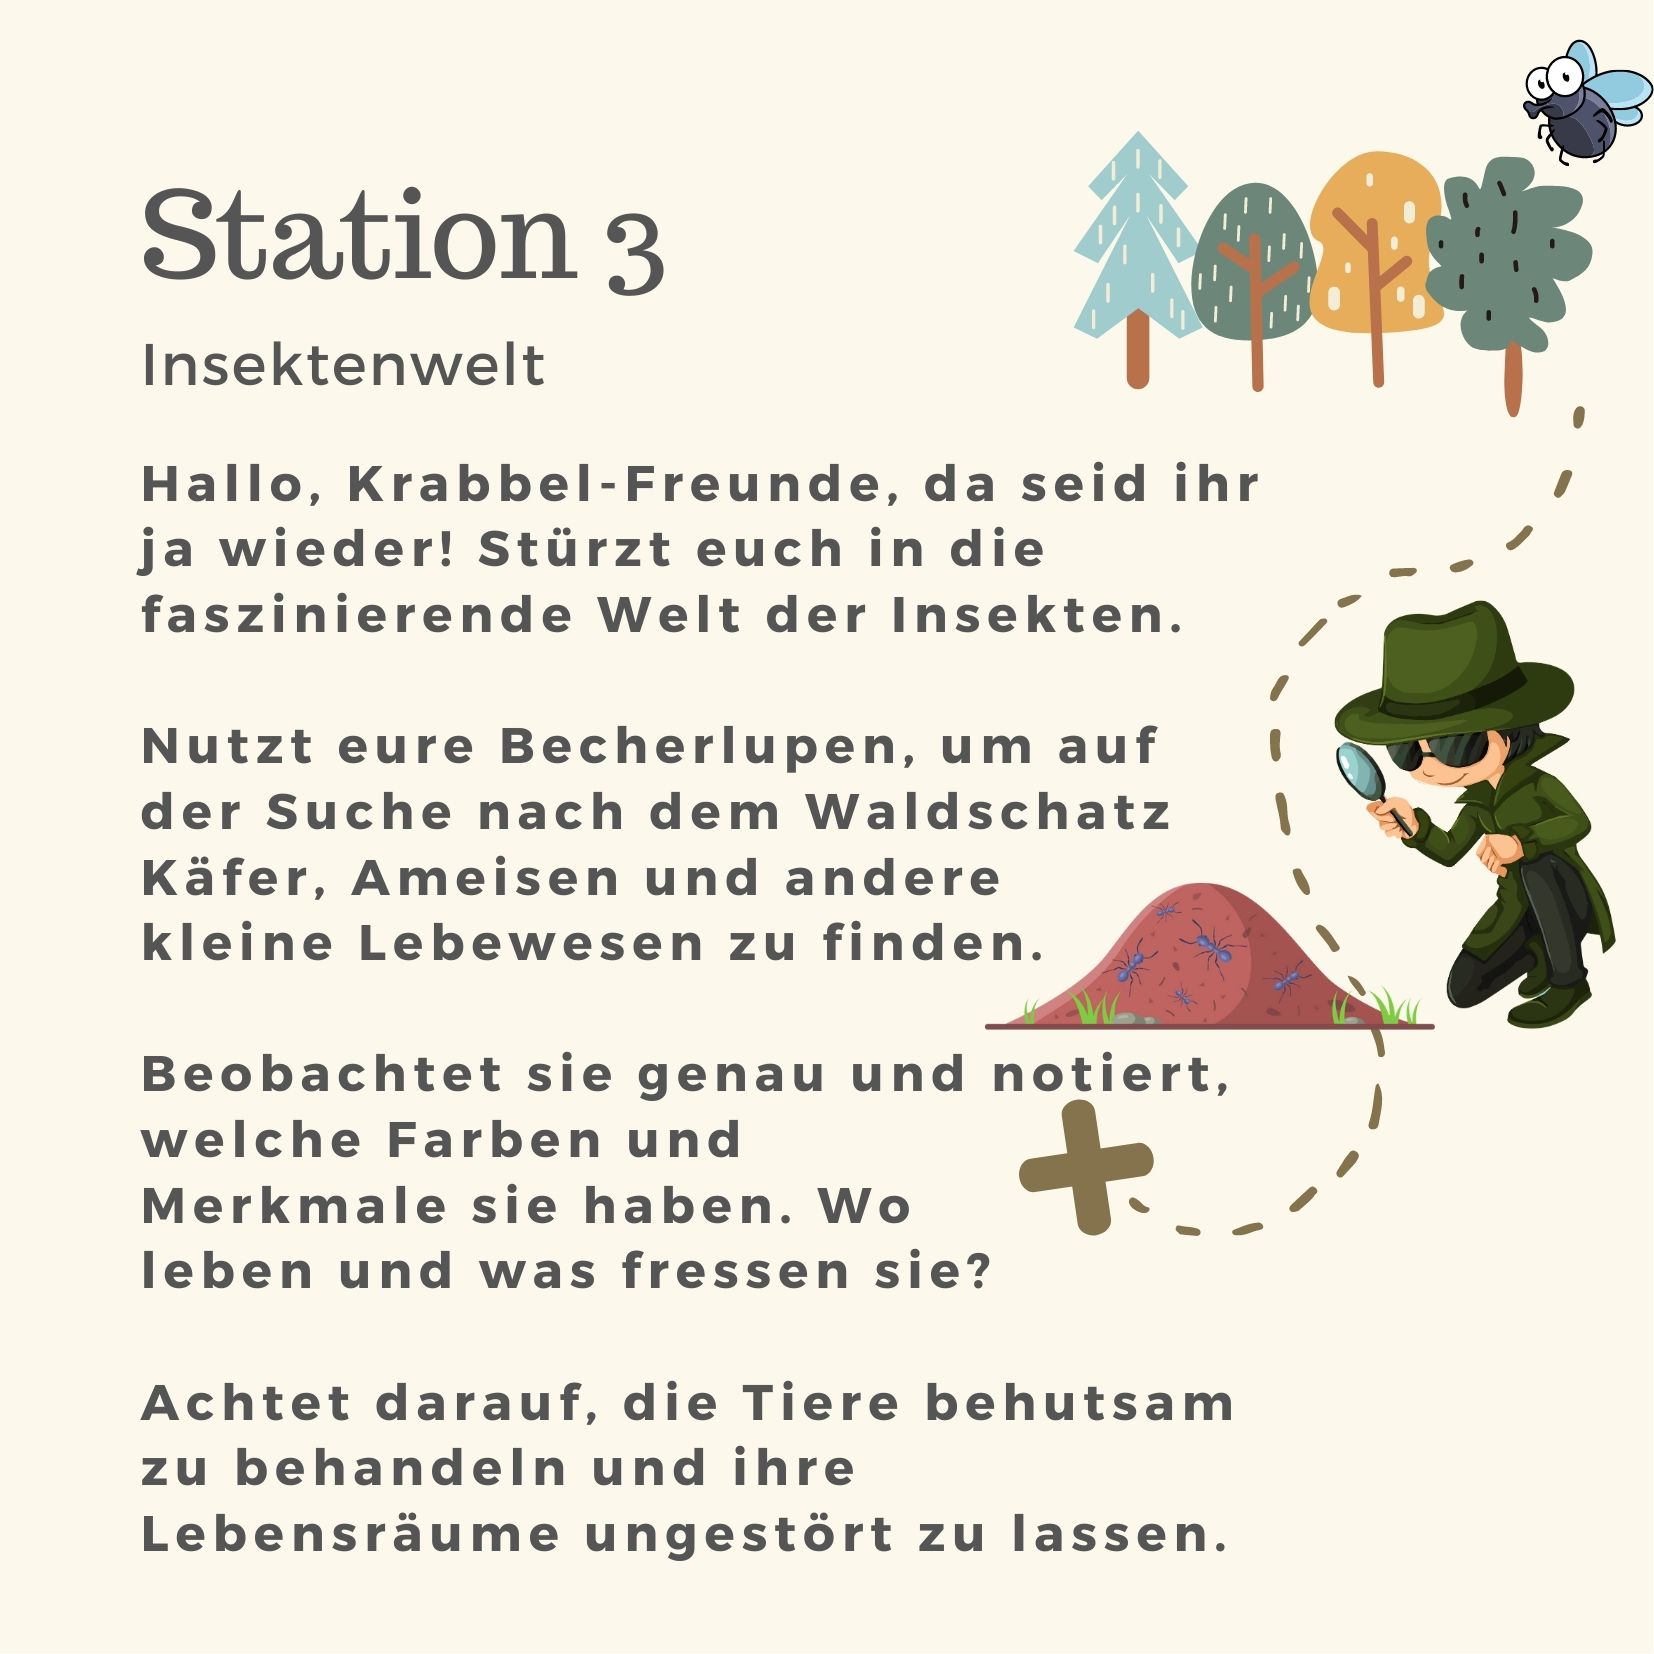 Station 3 - Insektenweld (Waldschatzsuche)